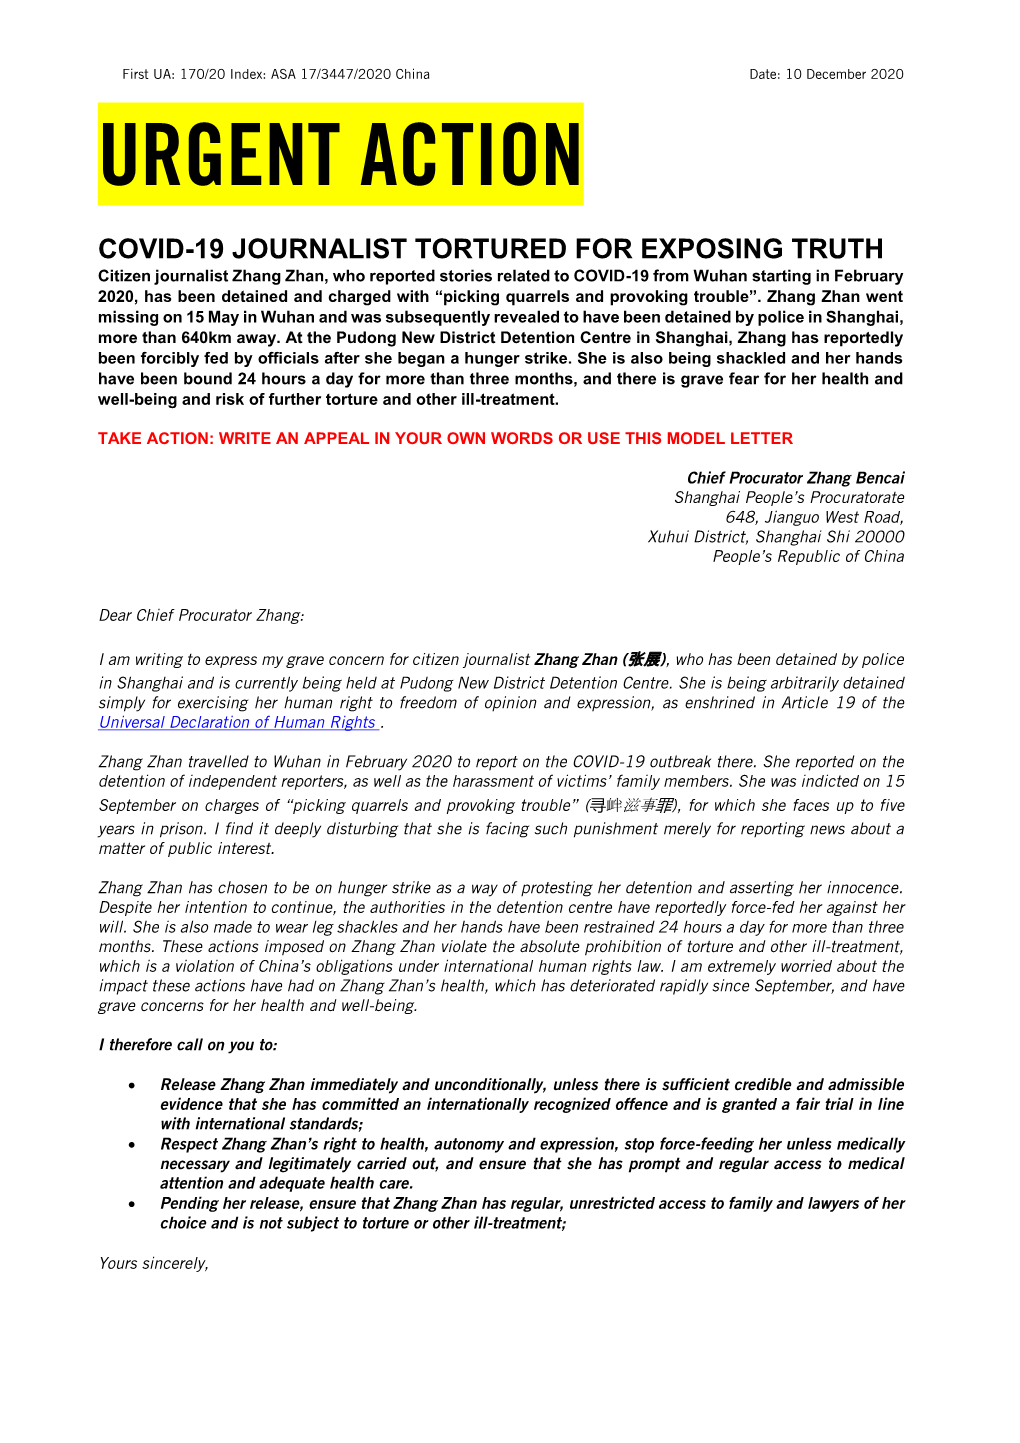 China: Covid-19 Journalist Tortured for Exposing Truth: Zhang Zhan